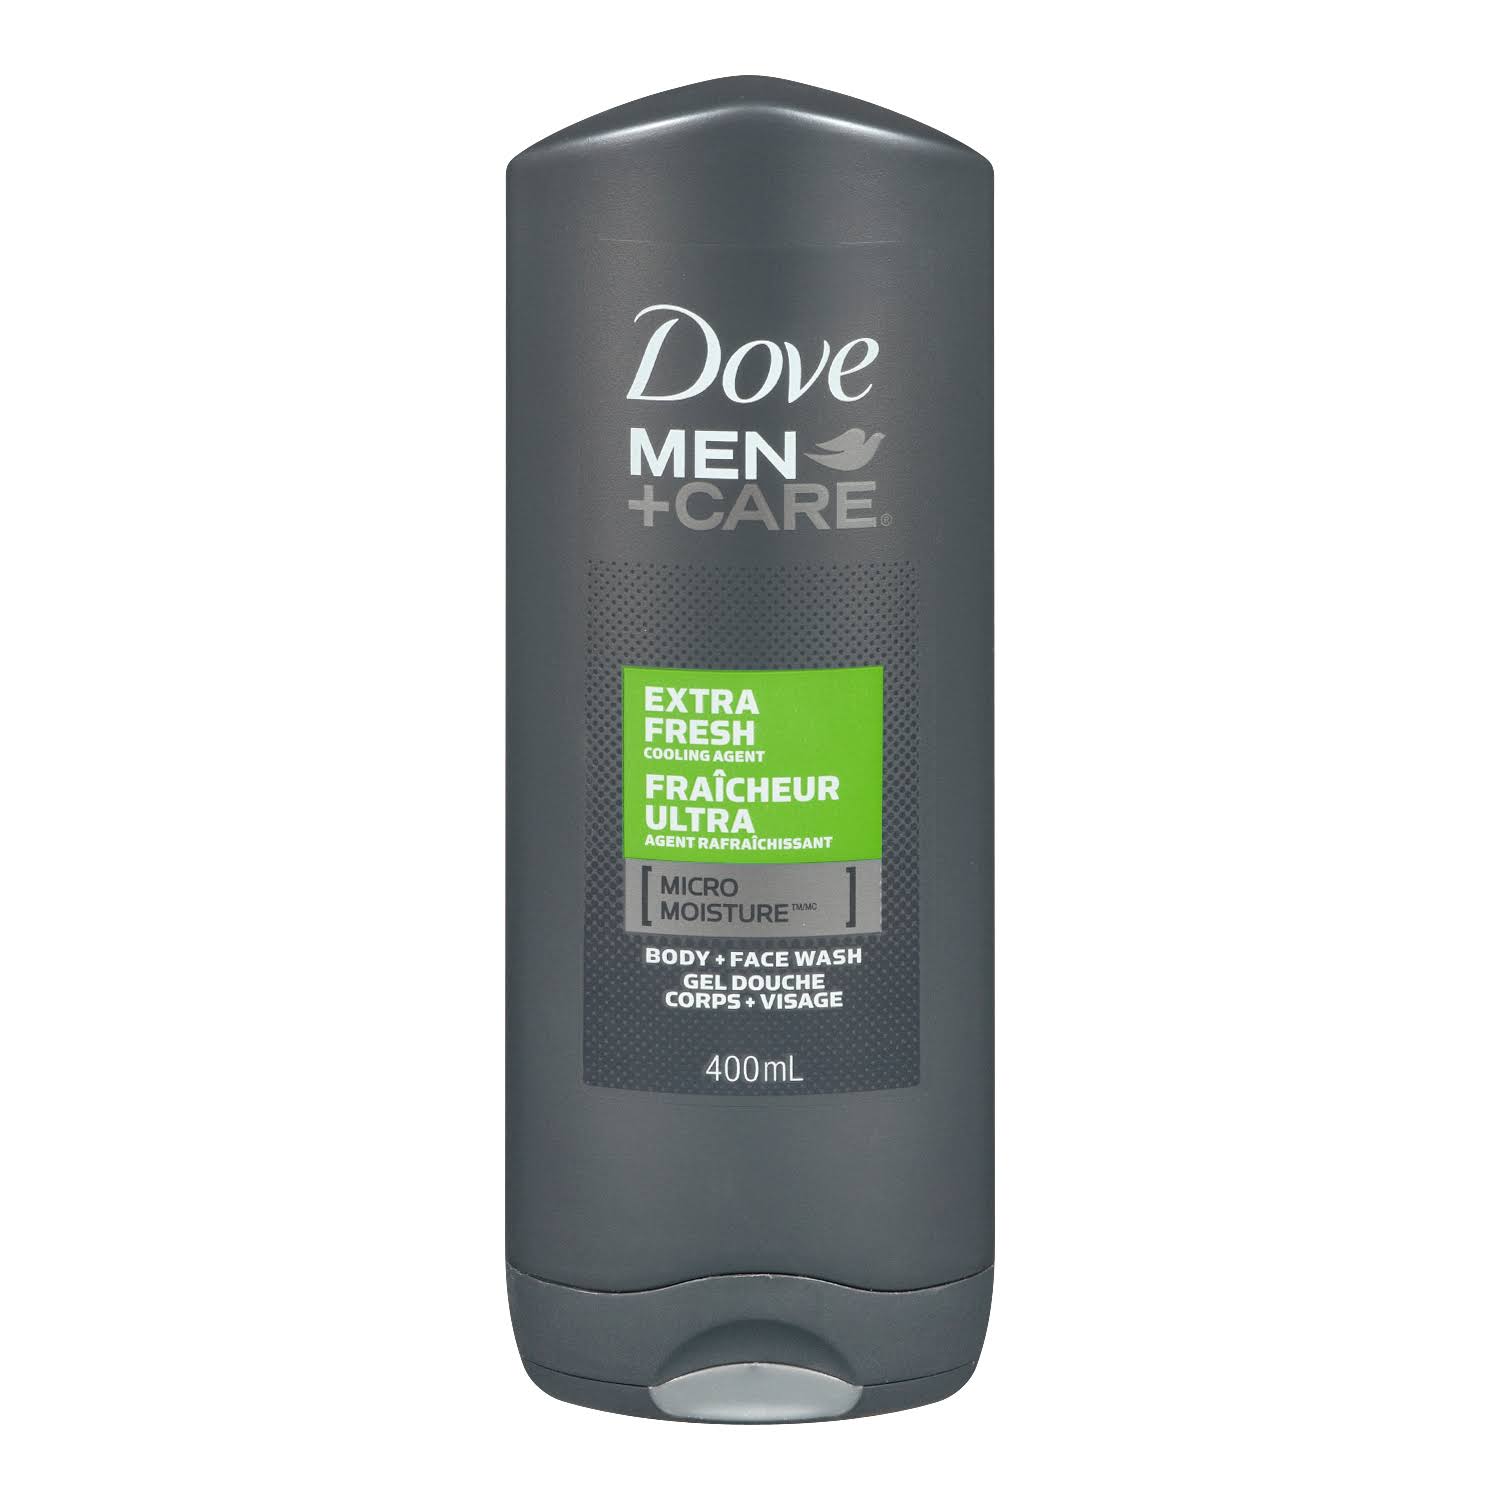 Dove Men Care Extra Fresh Body & Face Wash - 400 ml